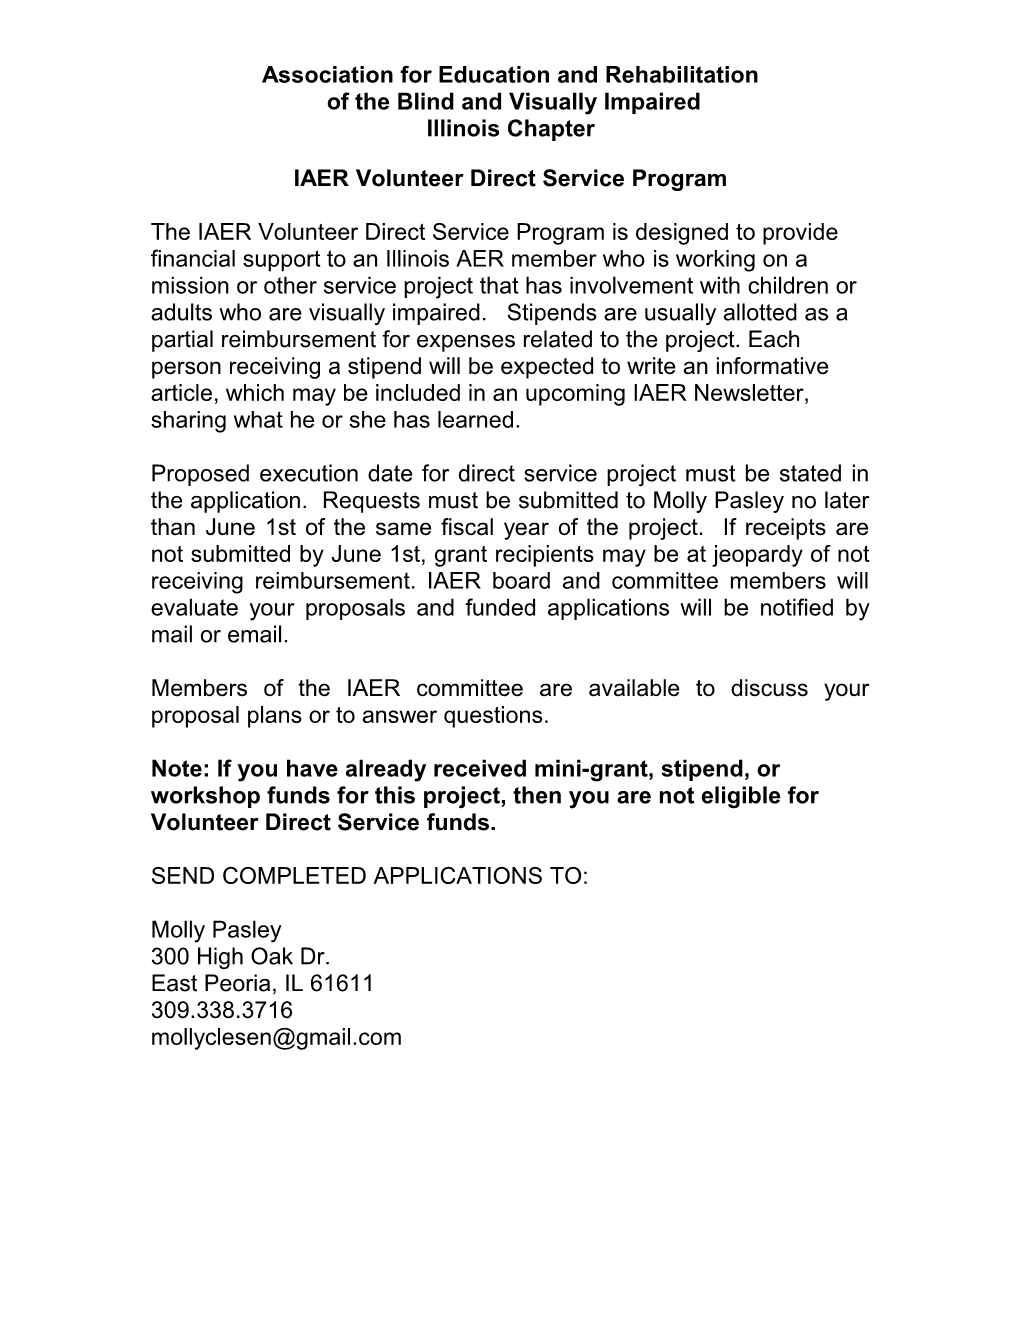 IAER Volunteer Direct Service Program